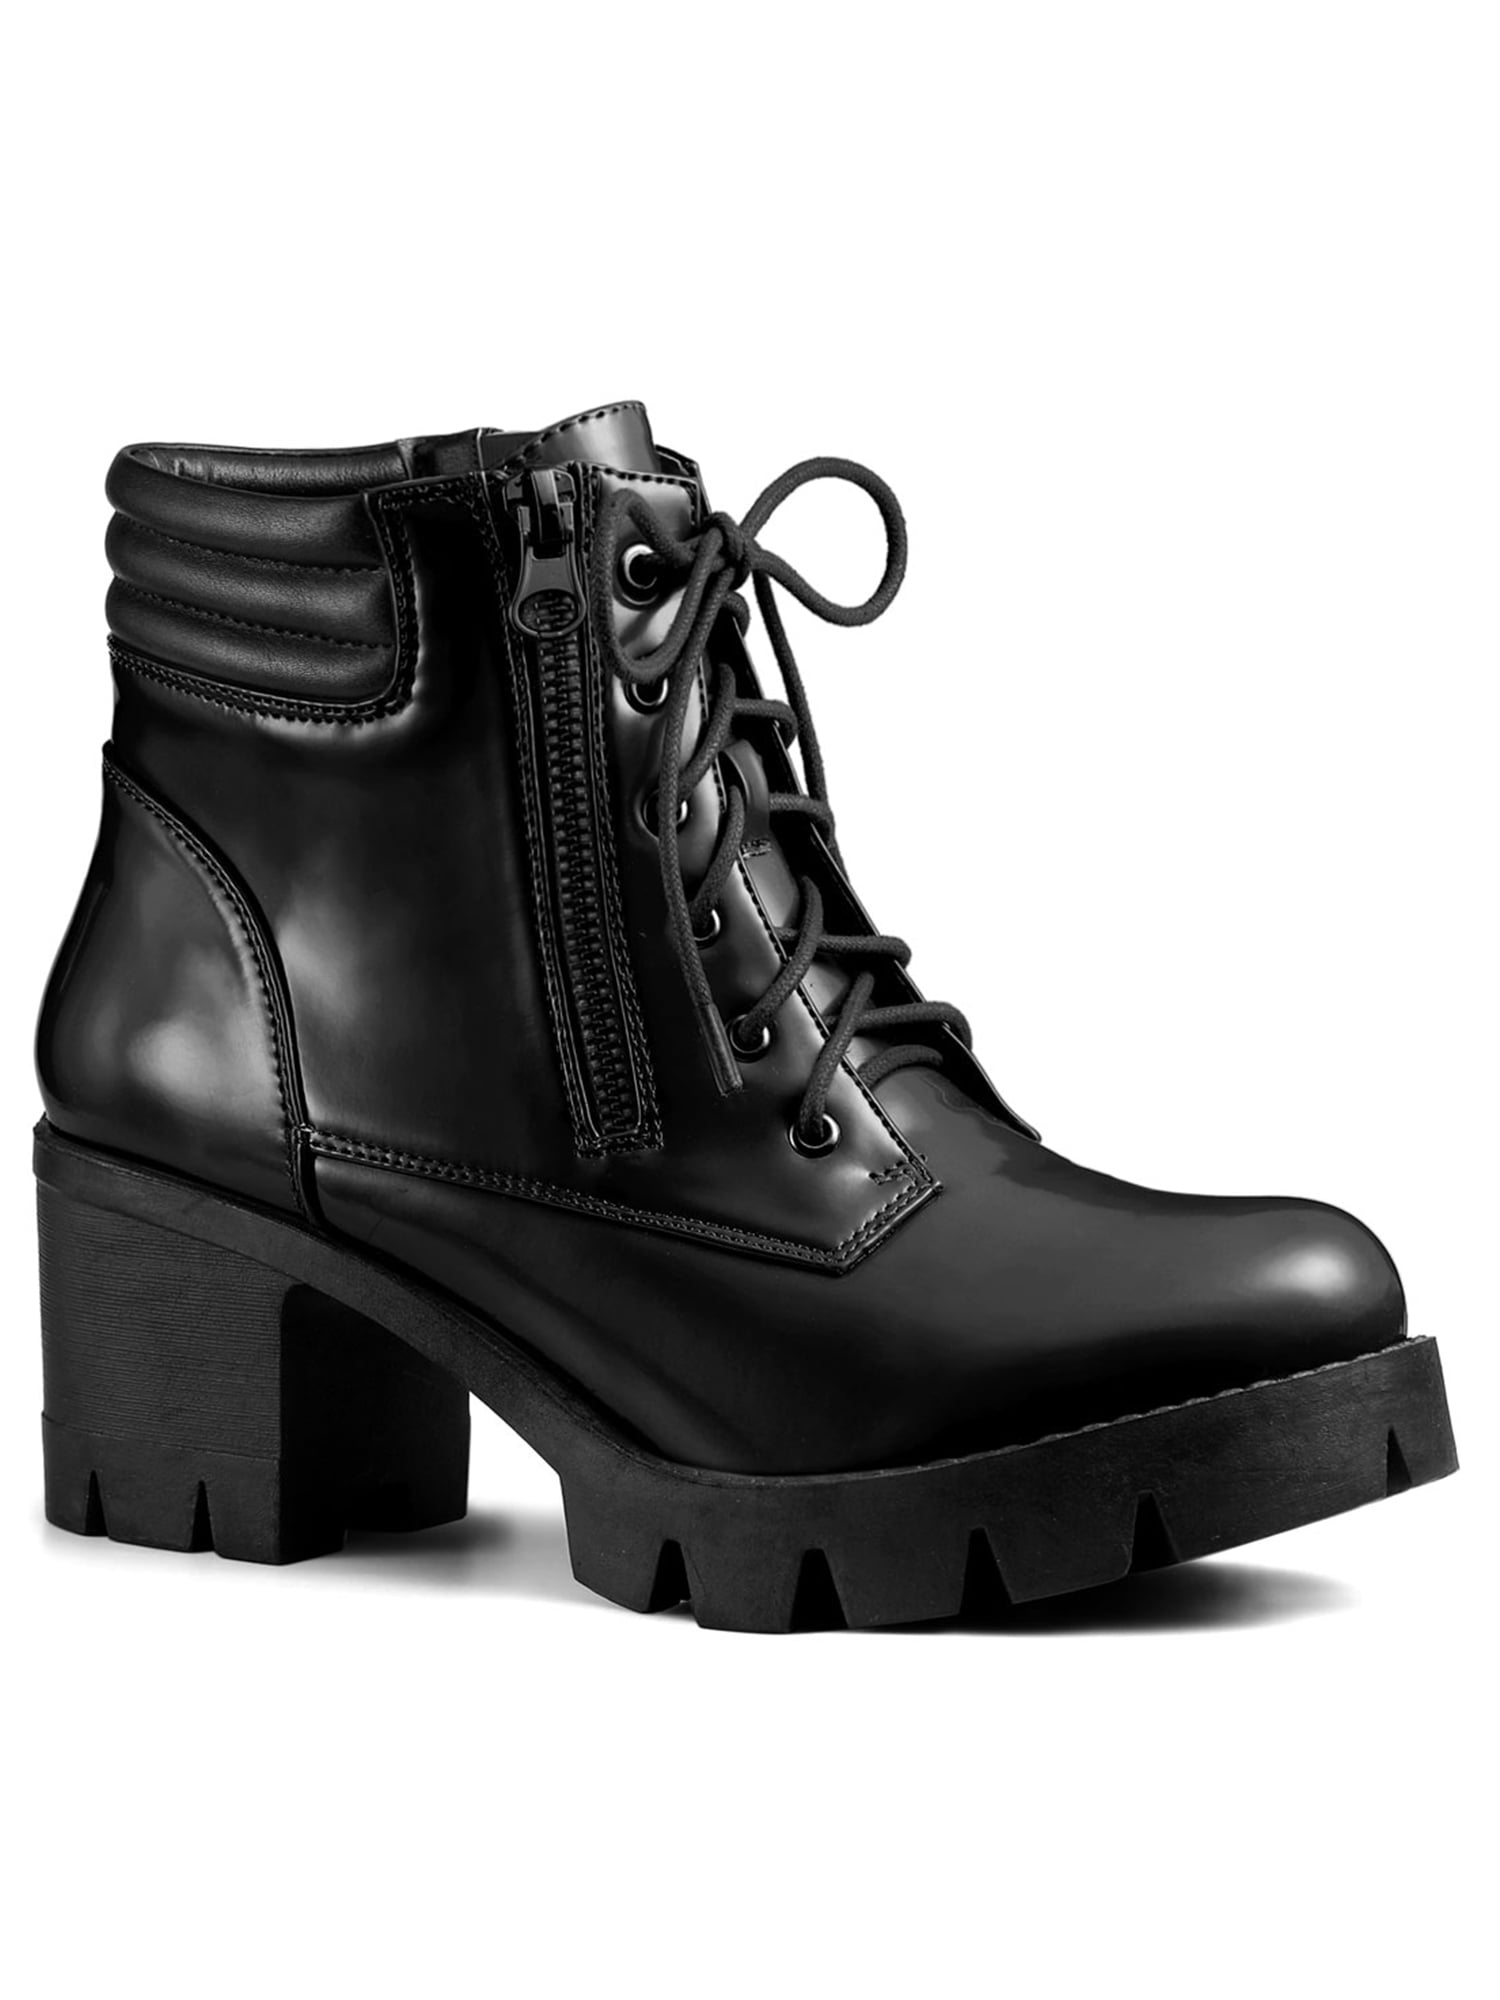 womens black combat boots with heel